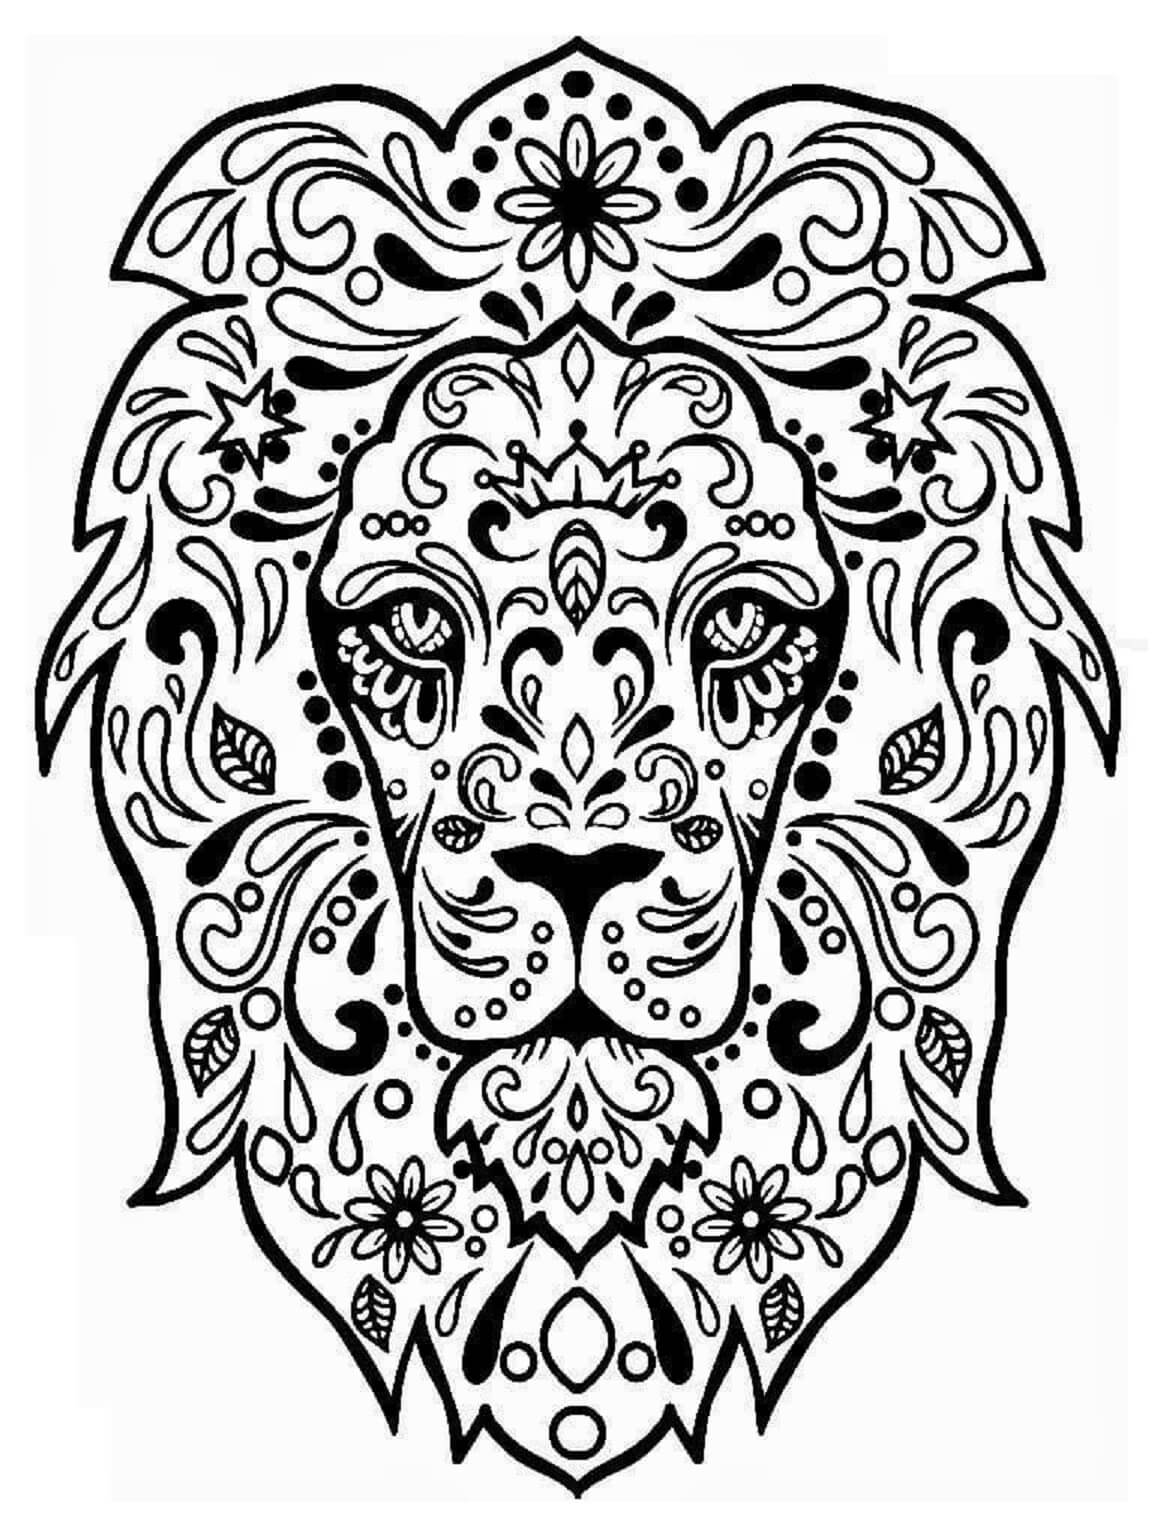 Mandala Lion Coloring Page - Sheet 2 Mandalas